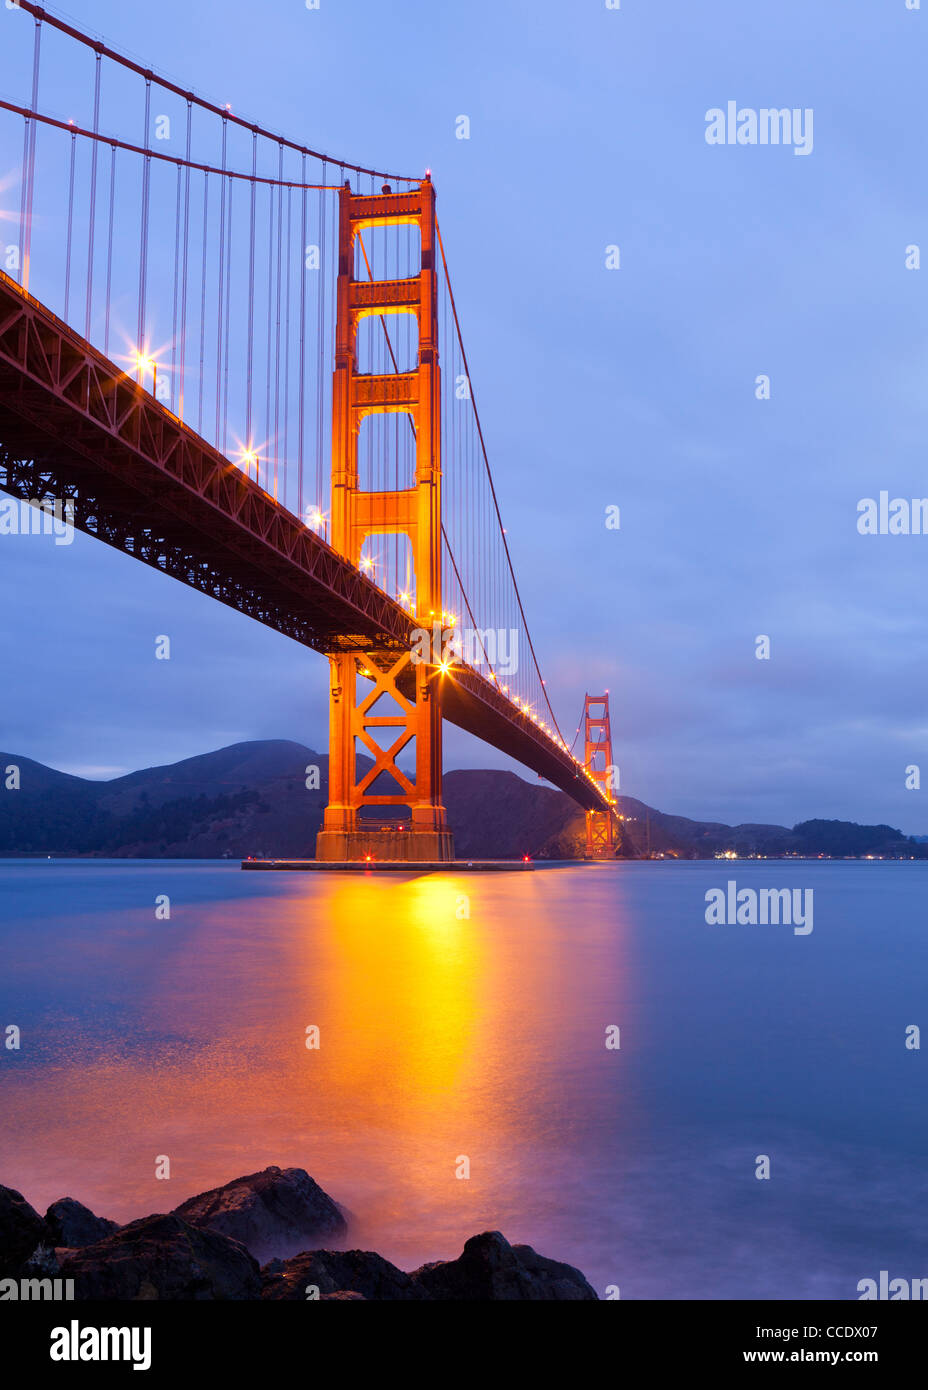 Golden Gate Bridge at night - San Francisco, California USA Banque D'Images